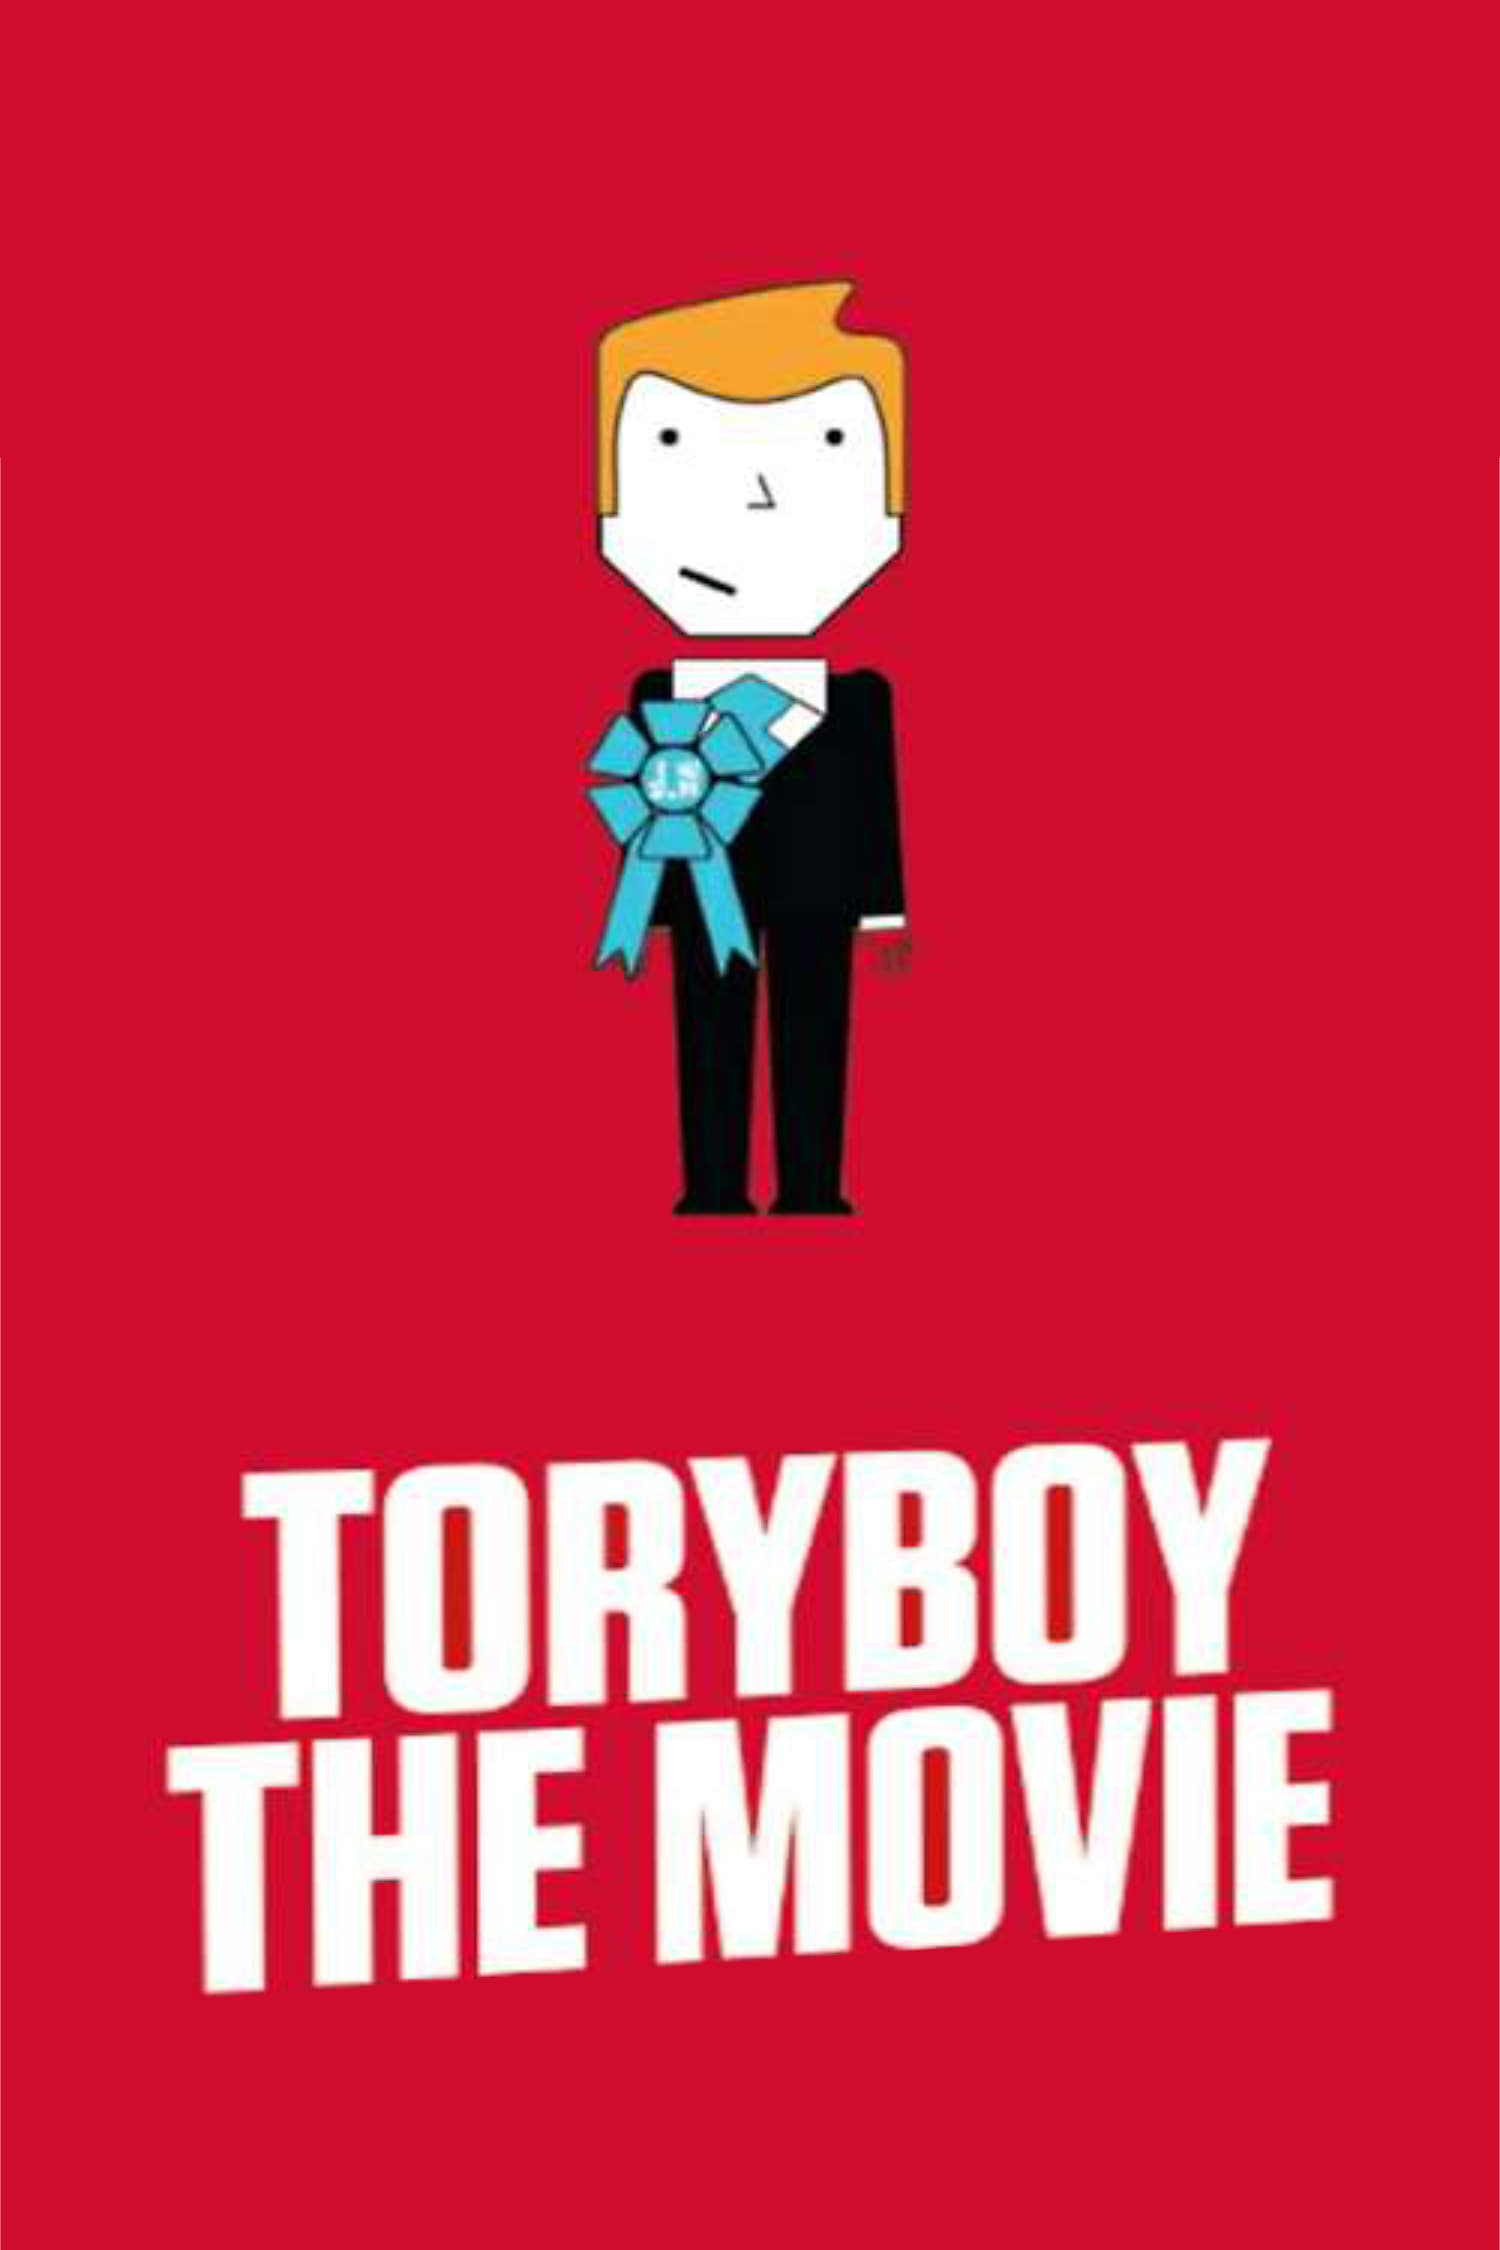 ToryBoy the Movie